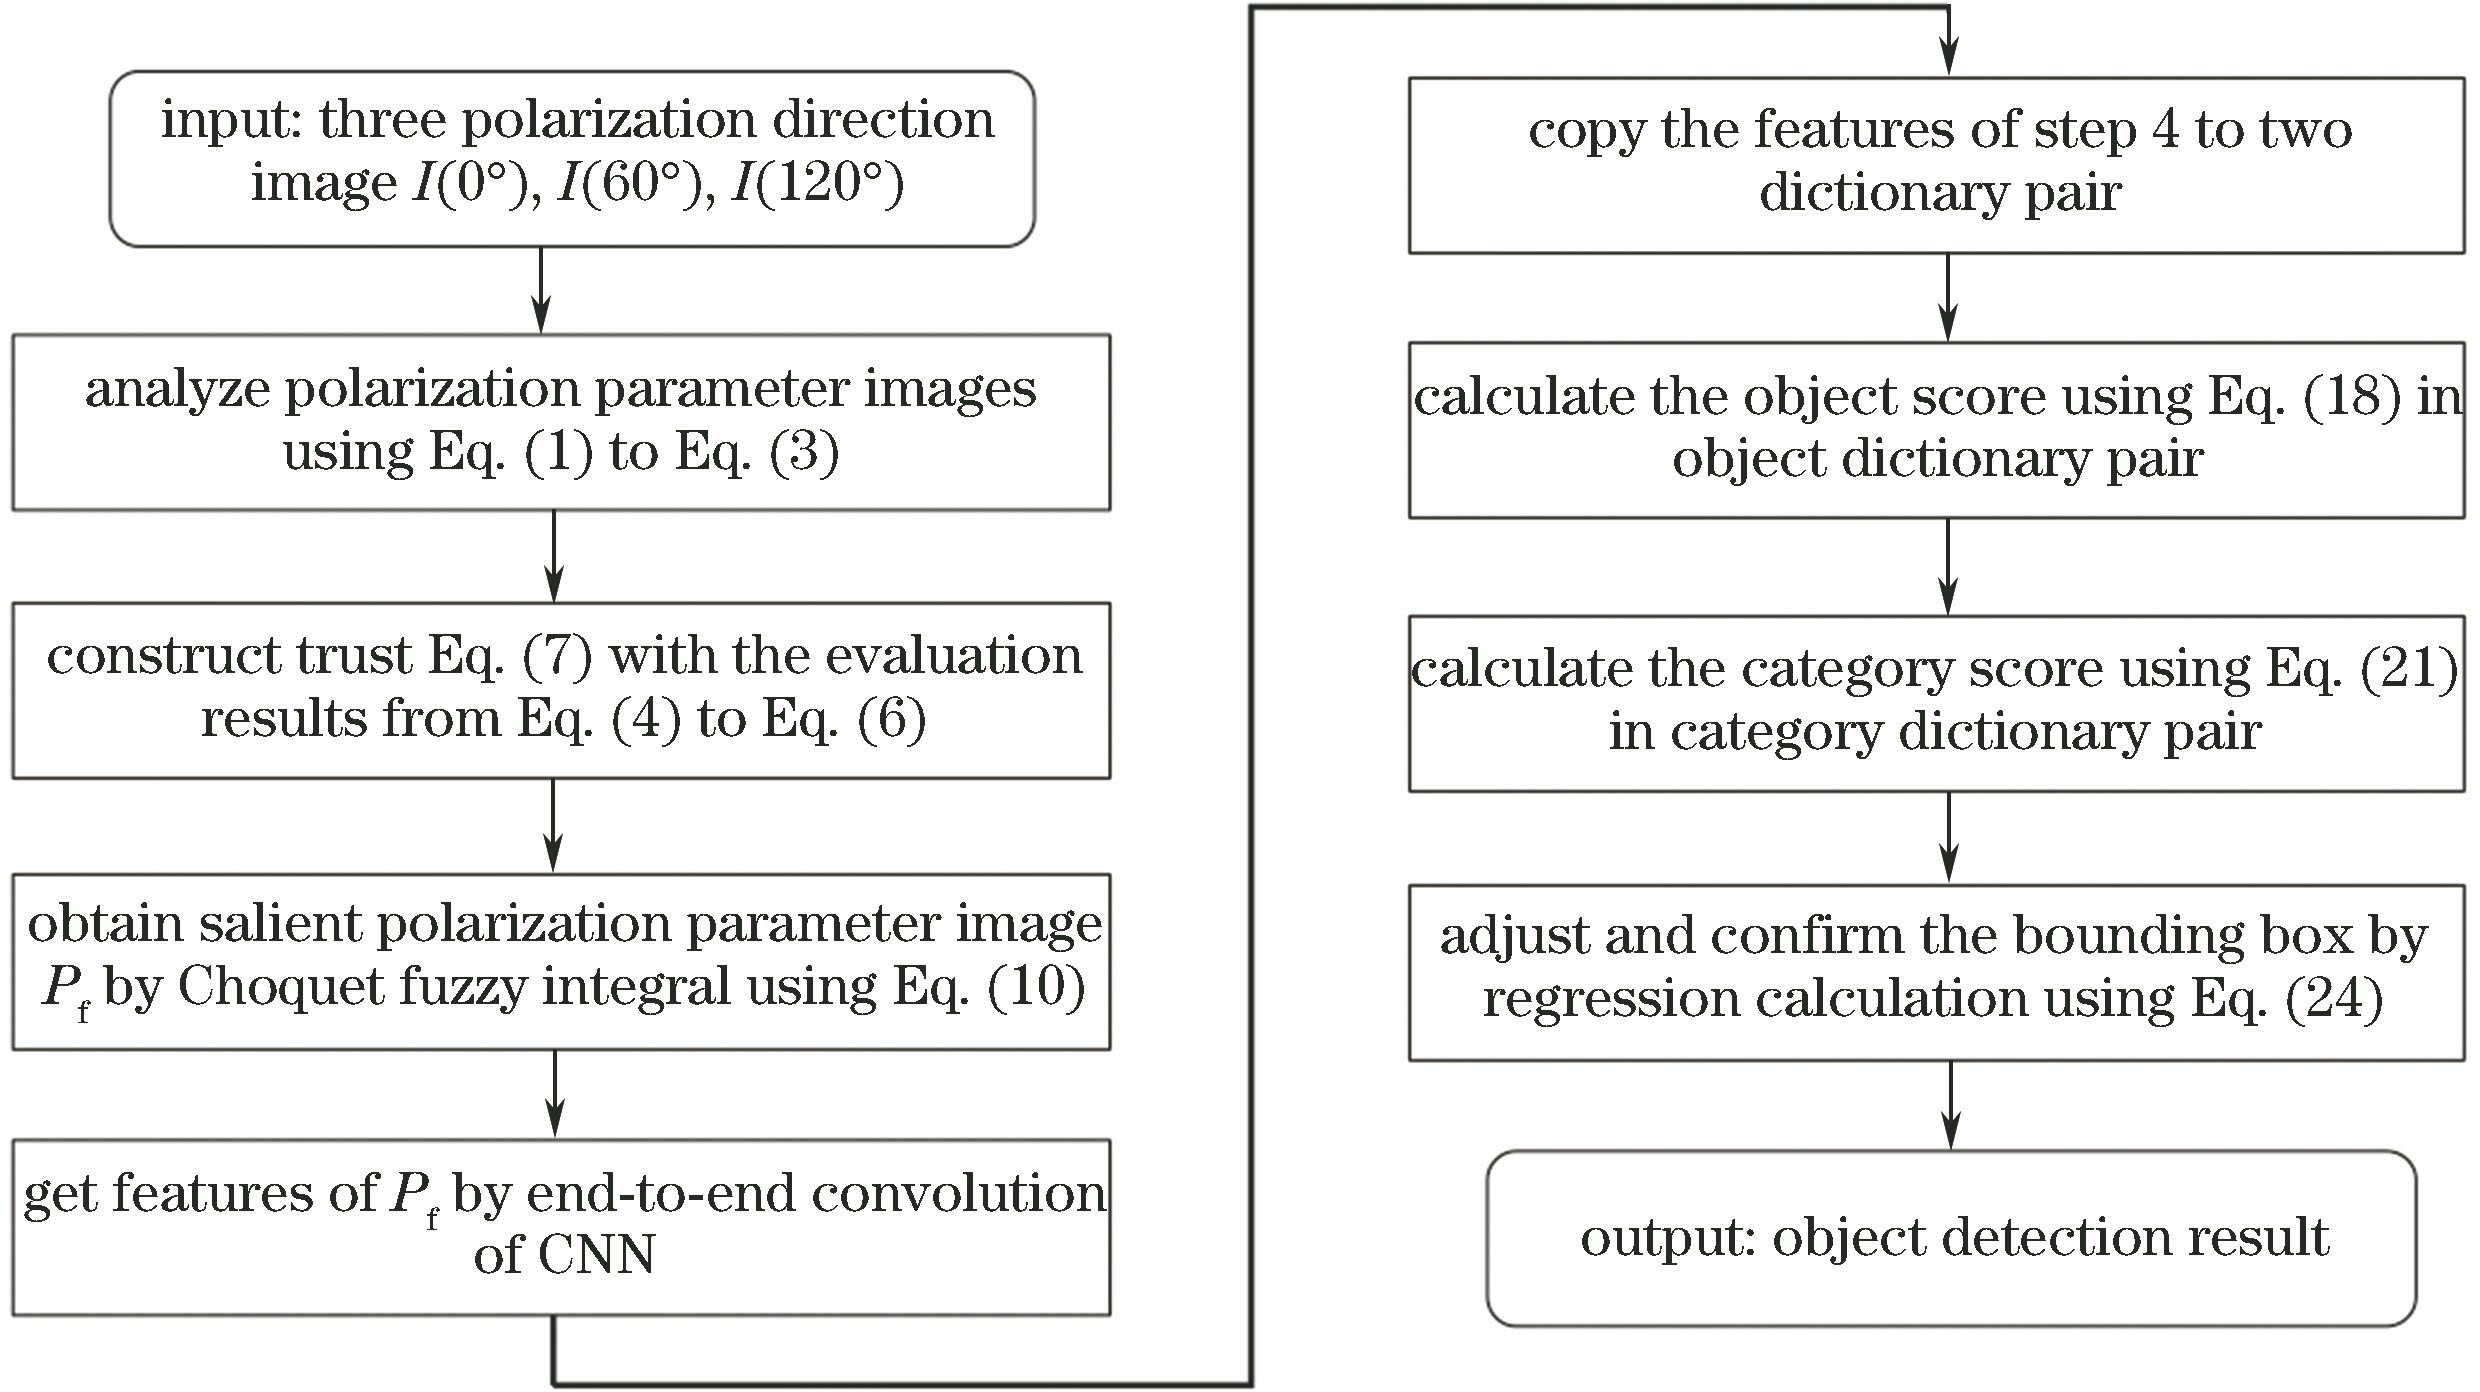 Object detection algorithm for salient polarization parameter image